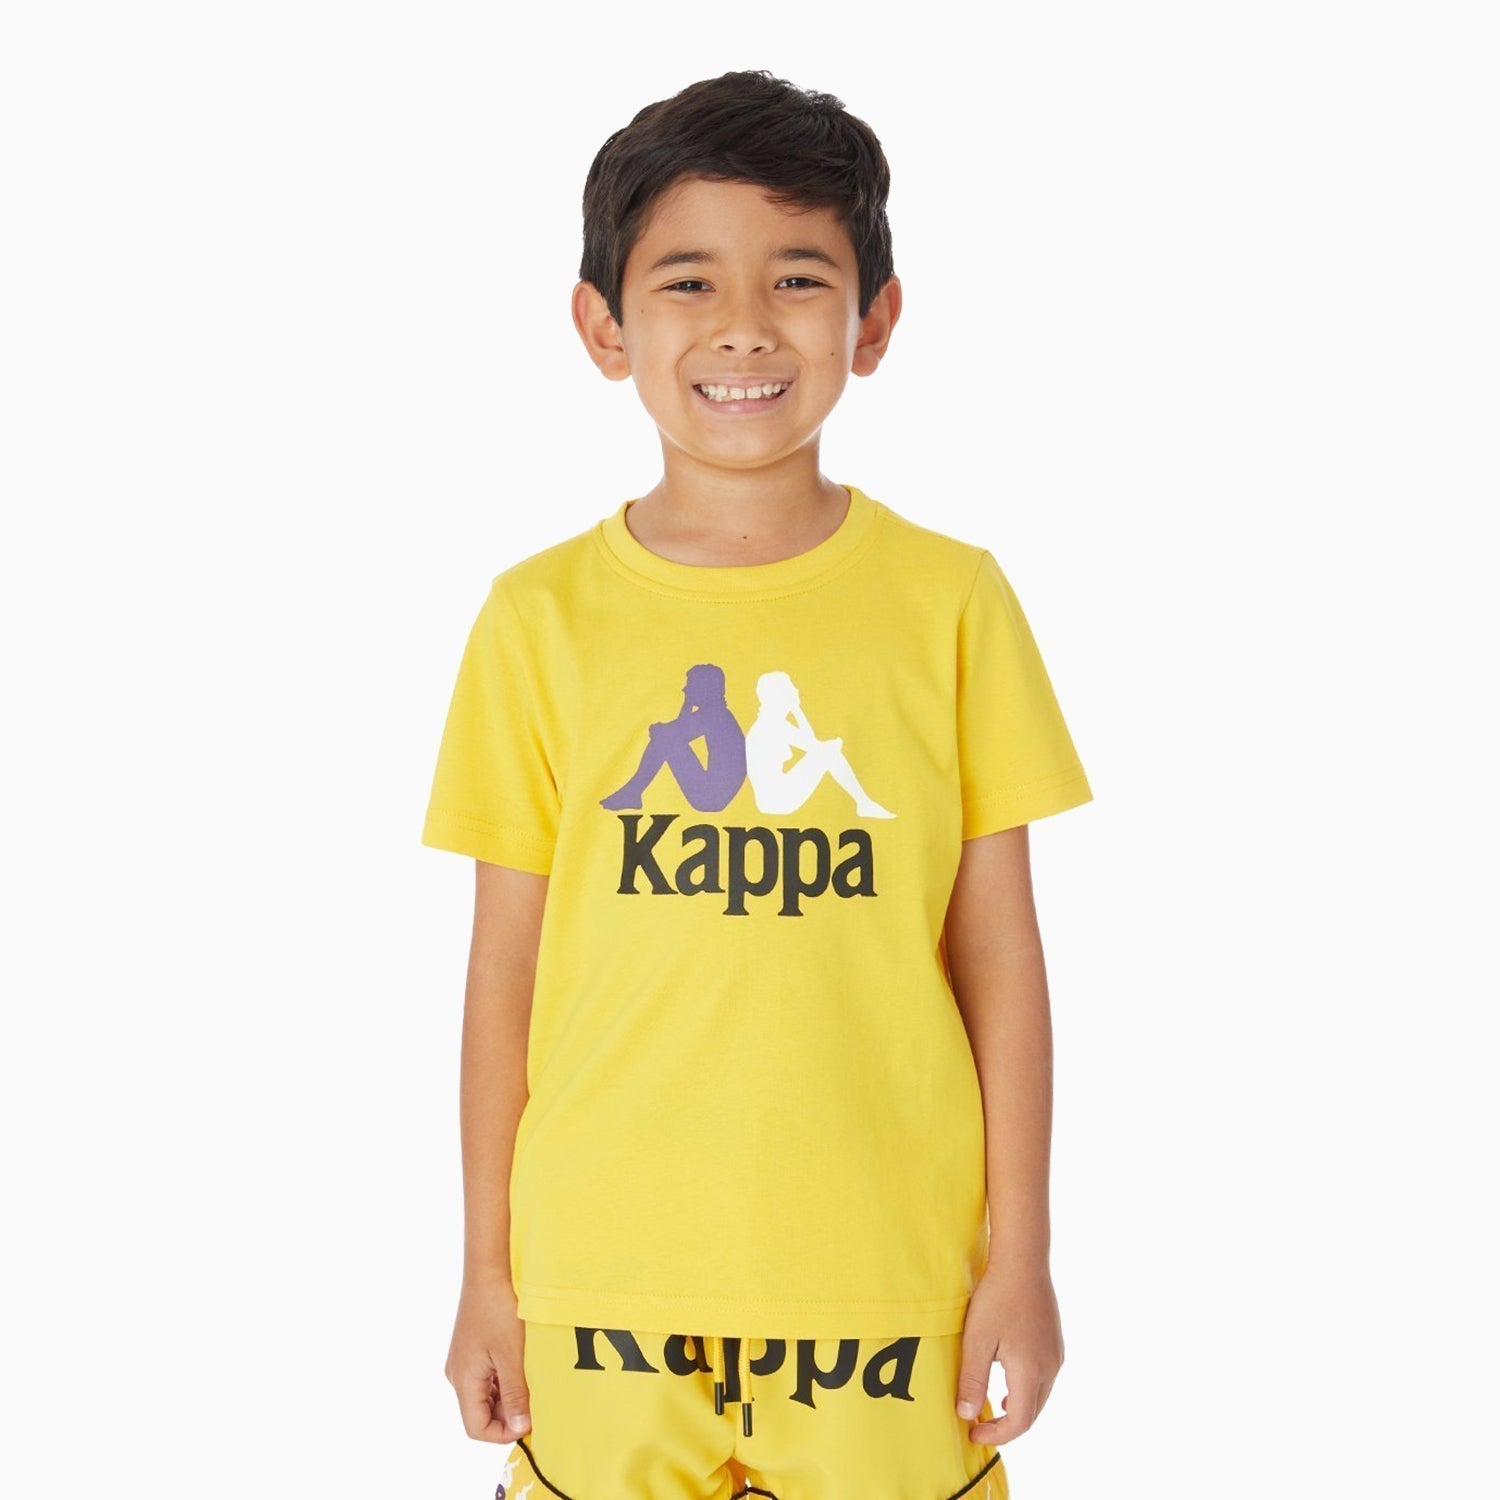 Kappa Kid's Authentic Estessi Outfit - Color: YELLOW VIOLET WHITE BLACK - Kids Premium Clothing -